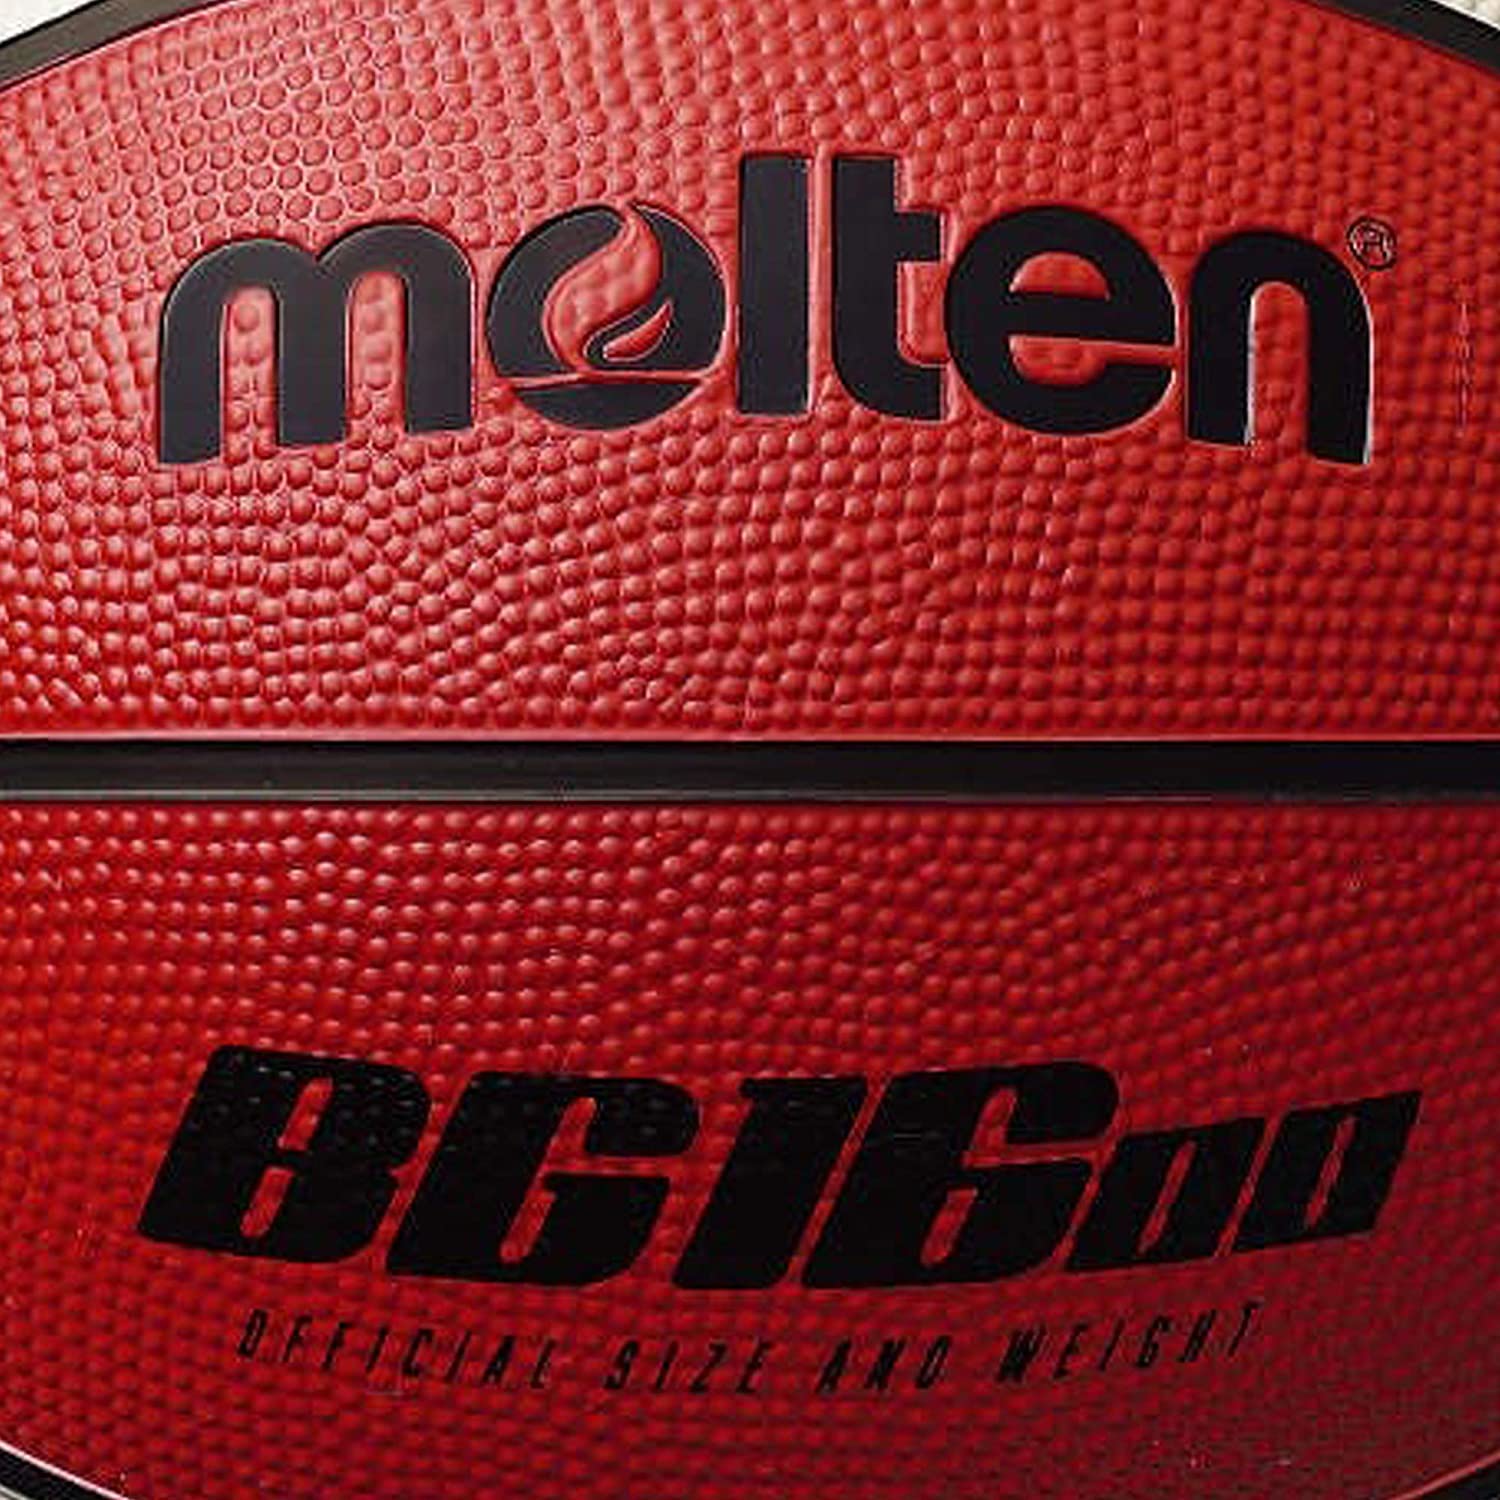 Ballons de basket BG1600 T6